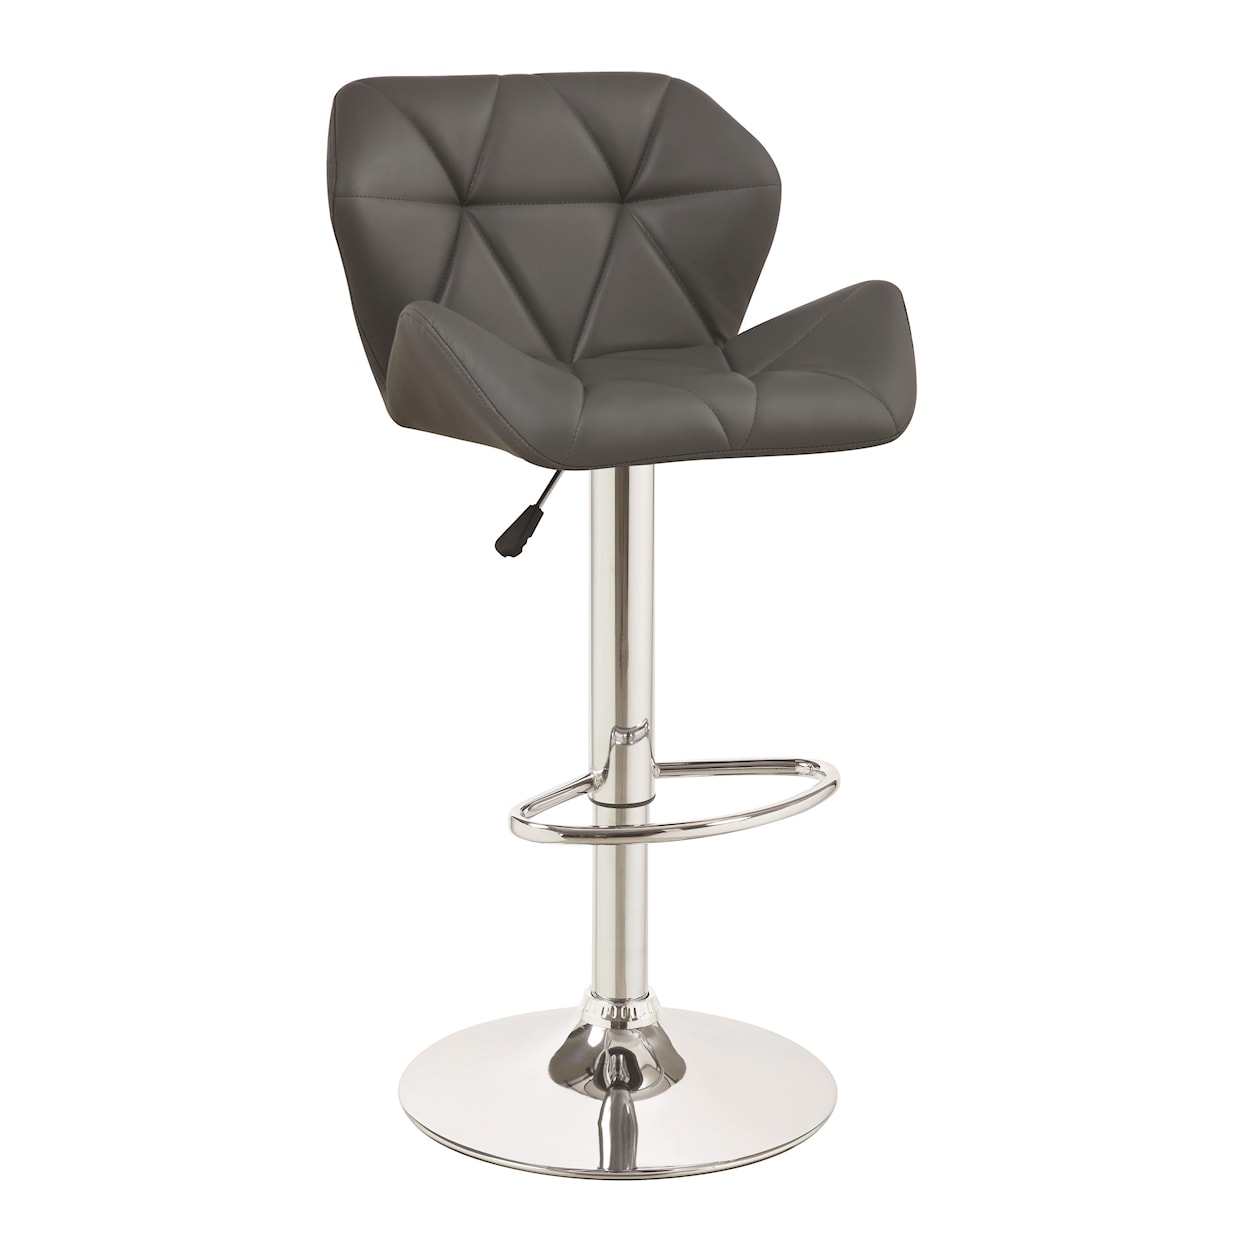 Michael Alan CSR Select Dining Chairs and Bar Stools Adjustable Stool